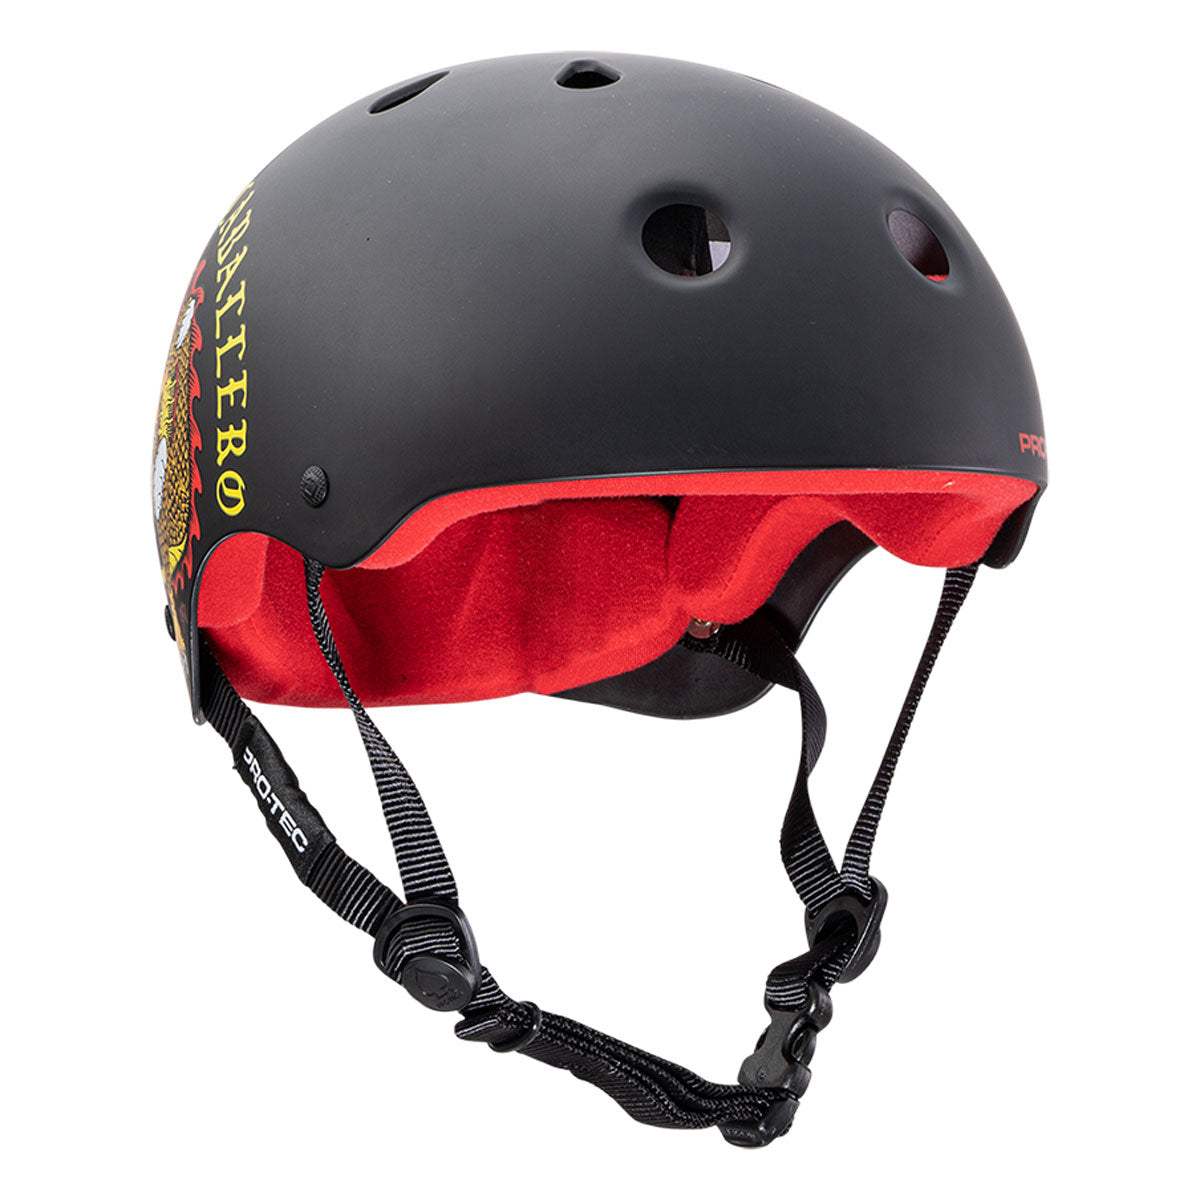 Pro Tec Classic Certified Helmet - Cab Dragon image 1